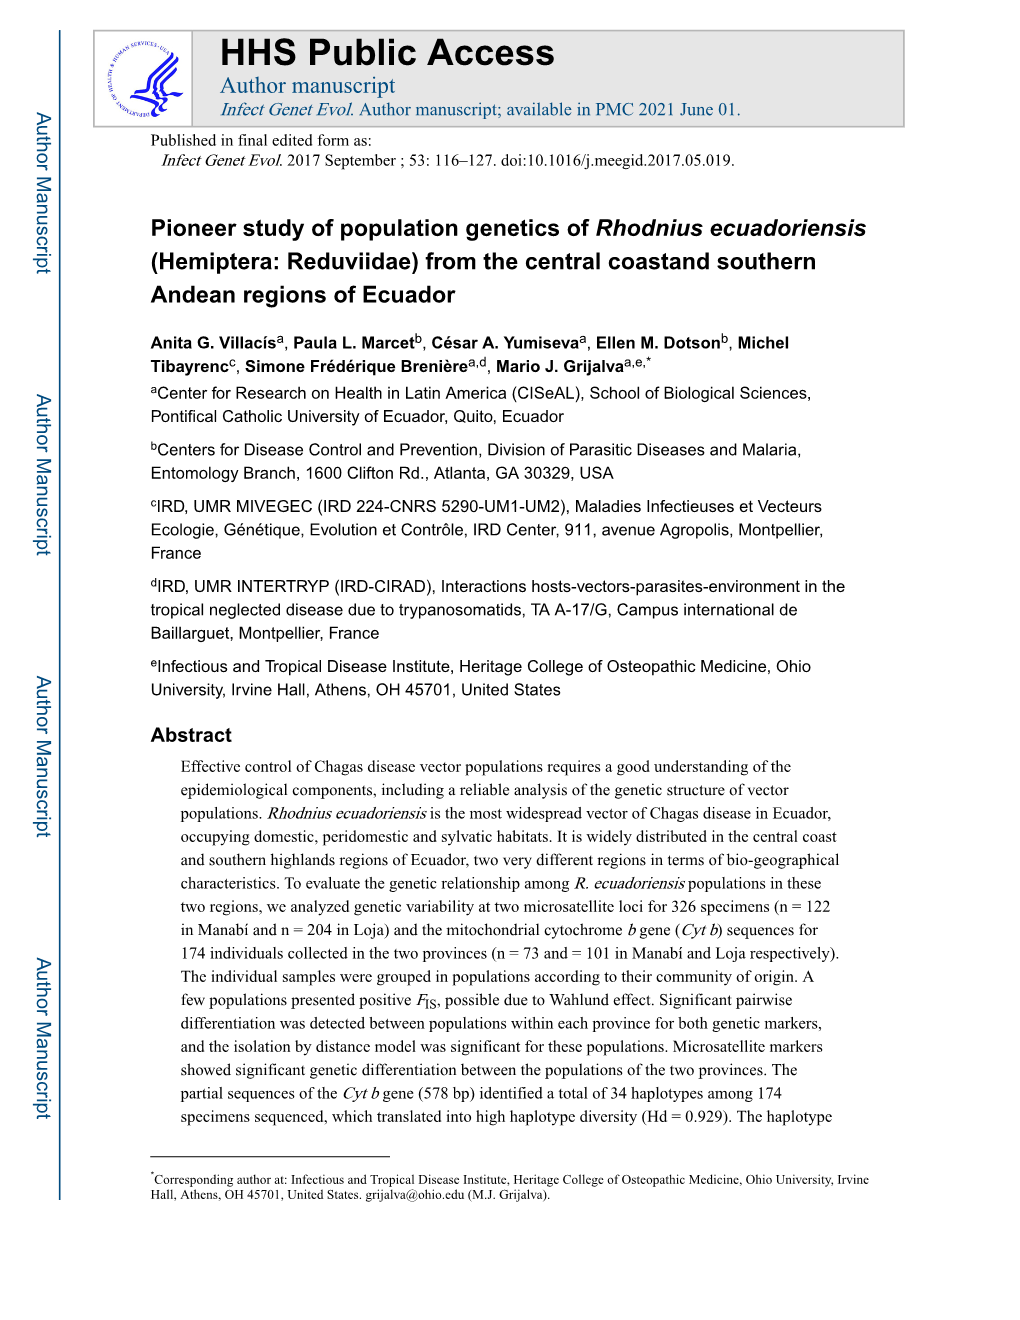 Pioneer Study of Population Genetics of Rhodnius Ecuadoriensis (Hemiptera: Reduviidae) from the Central Coastand Southern Andean Regions of Ecuador